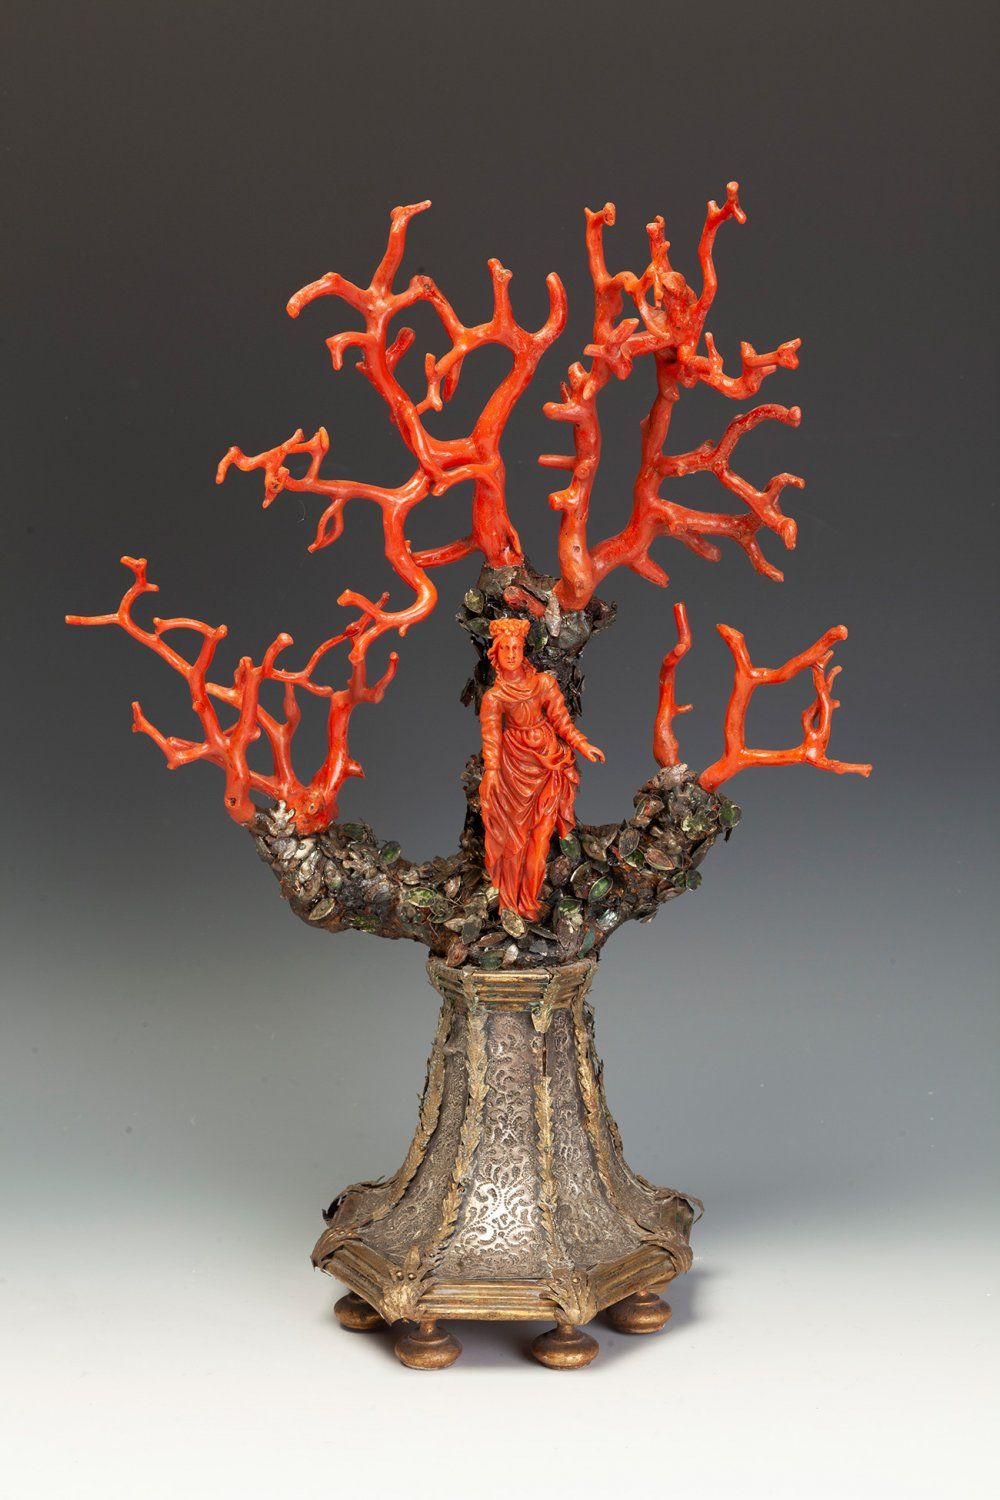 Null 红珊瑚雕像和树枝组，17世纪。
红珊瑚的雕刻。
银质基座。
它在红珊瑚上有修复的痕迹。
尺寸：42 x 29 x 11厘米。
精致的红珊瑚雕装饰品，雕&hellip;